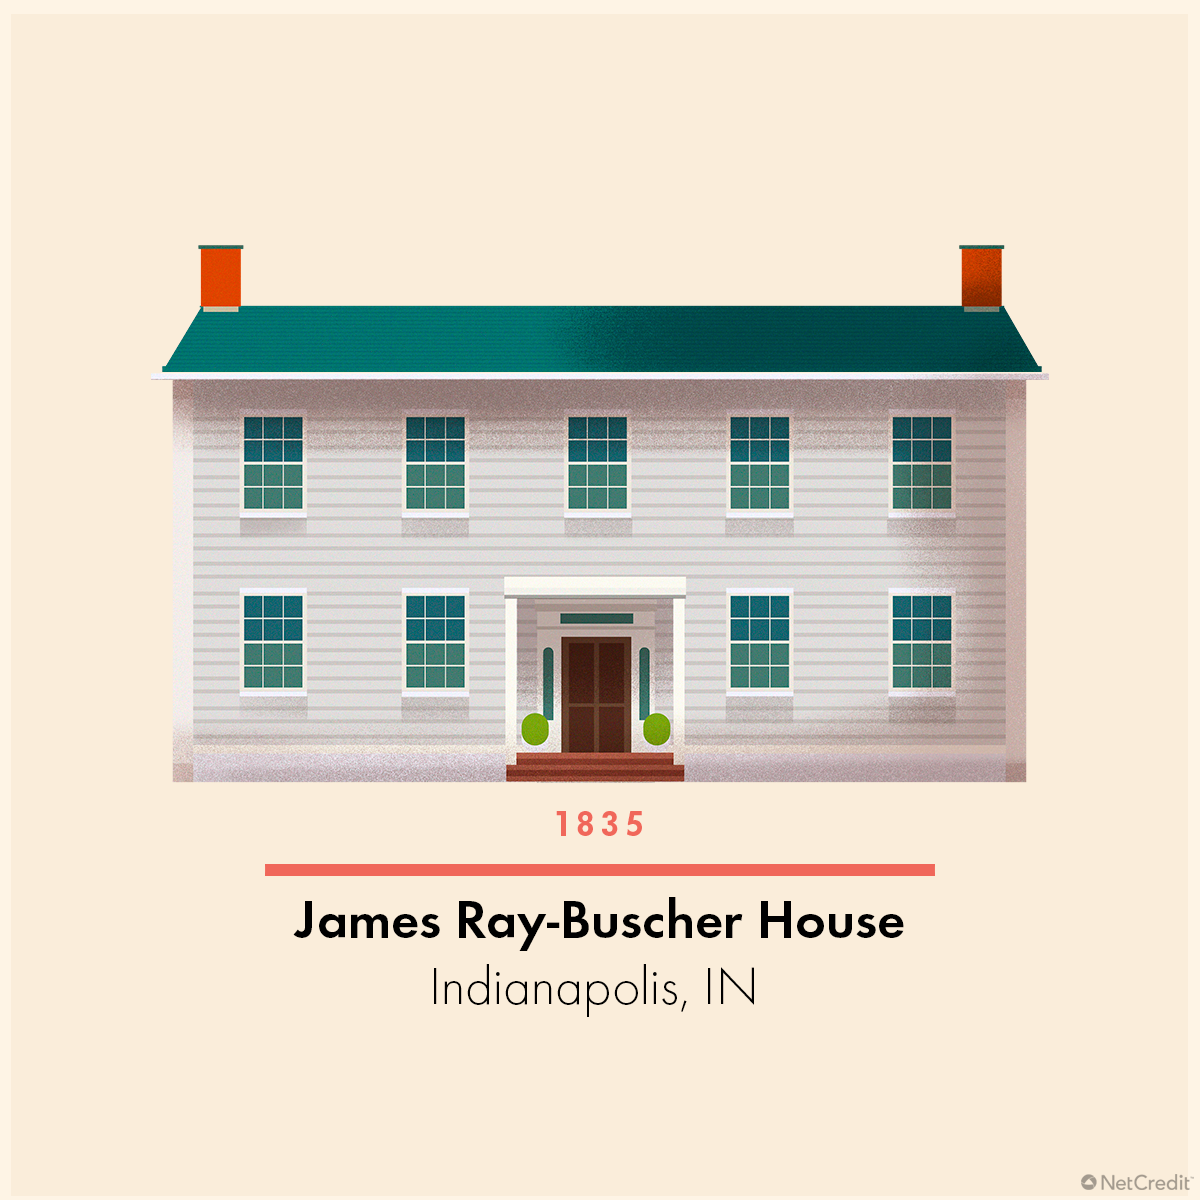 James Ray-Buscher House